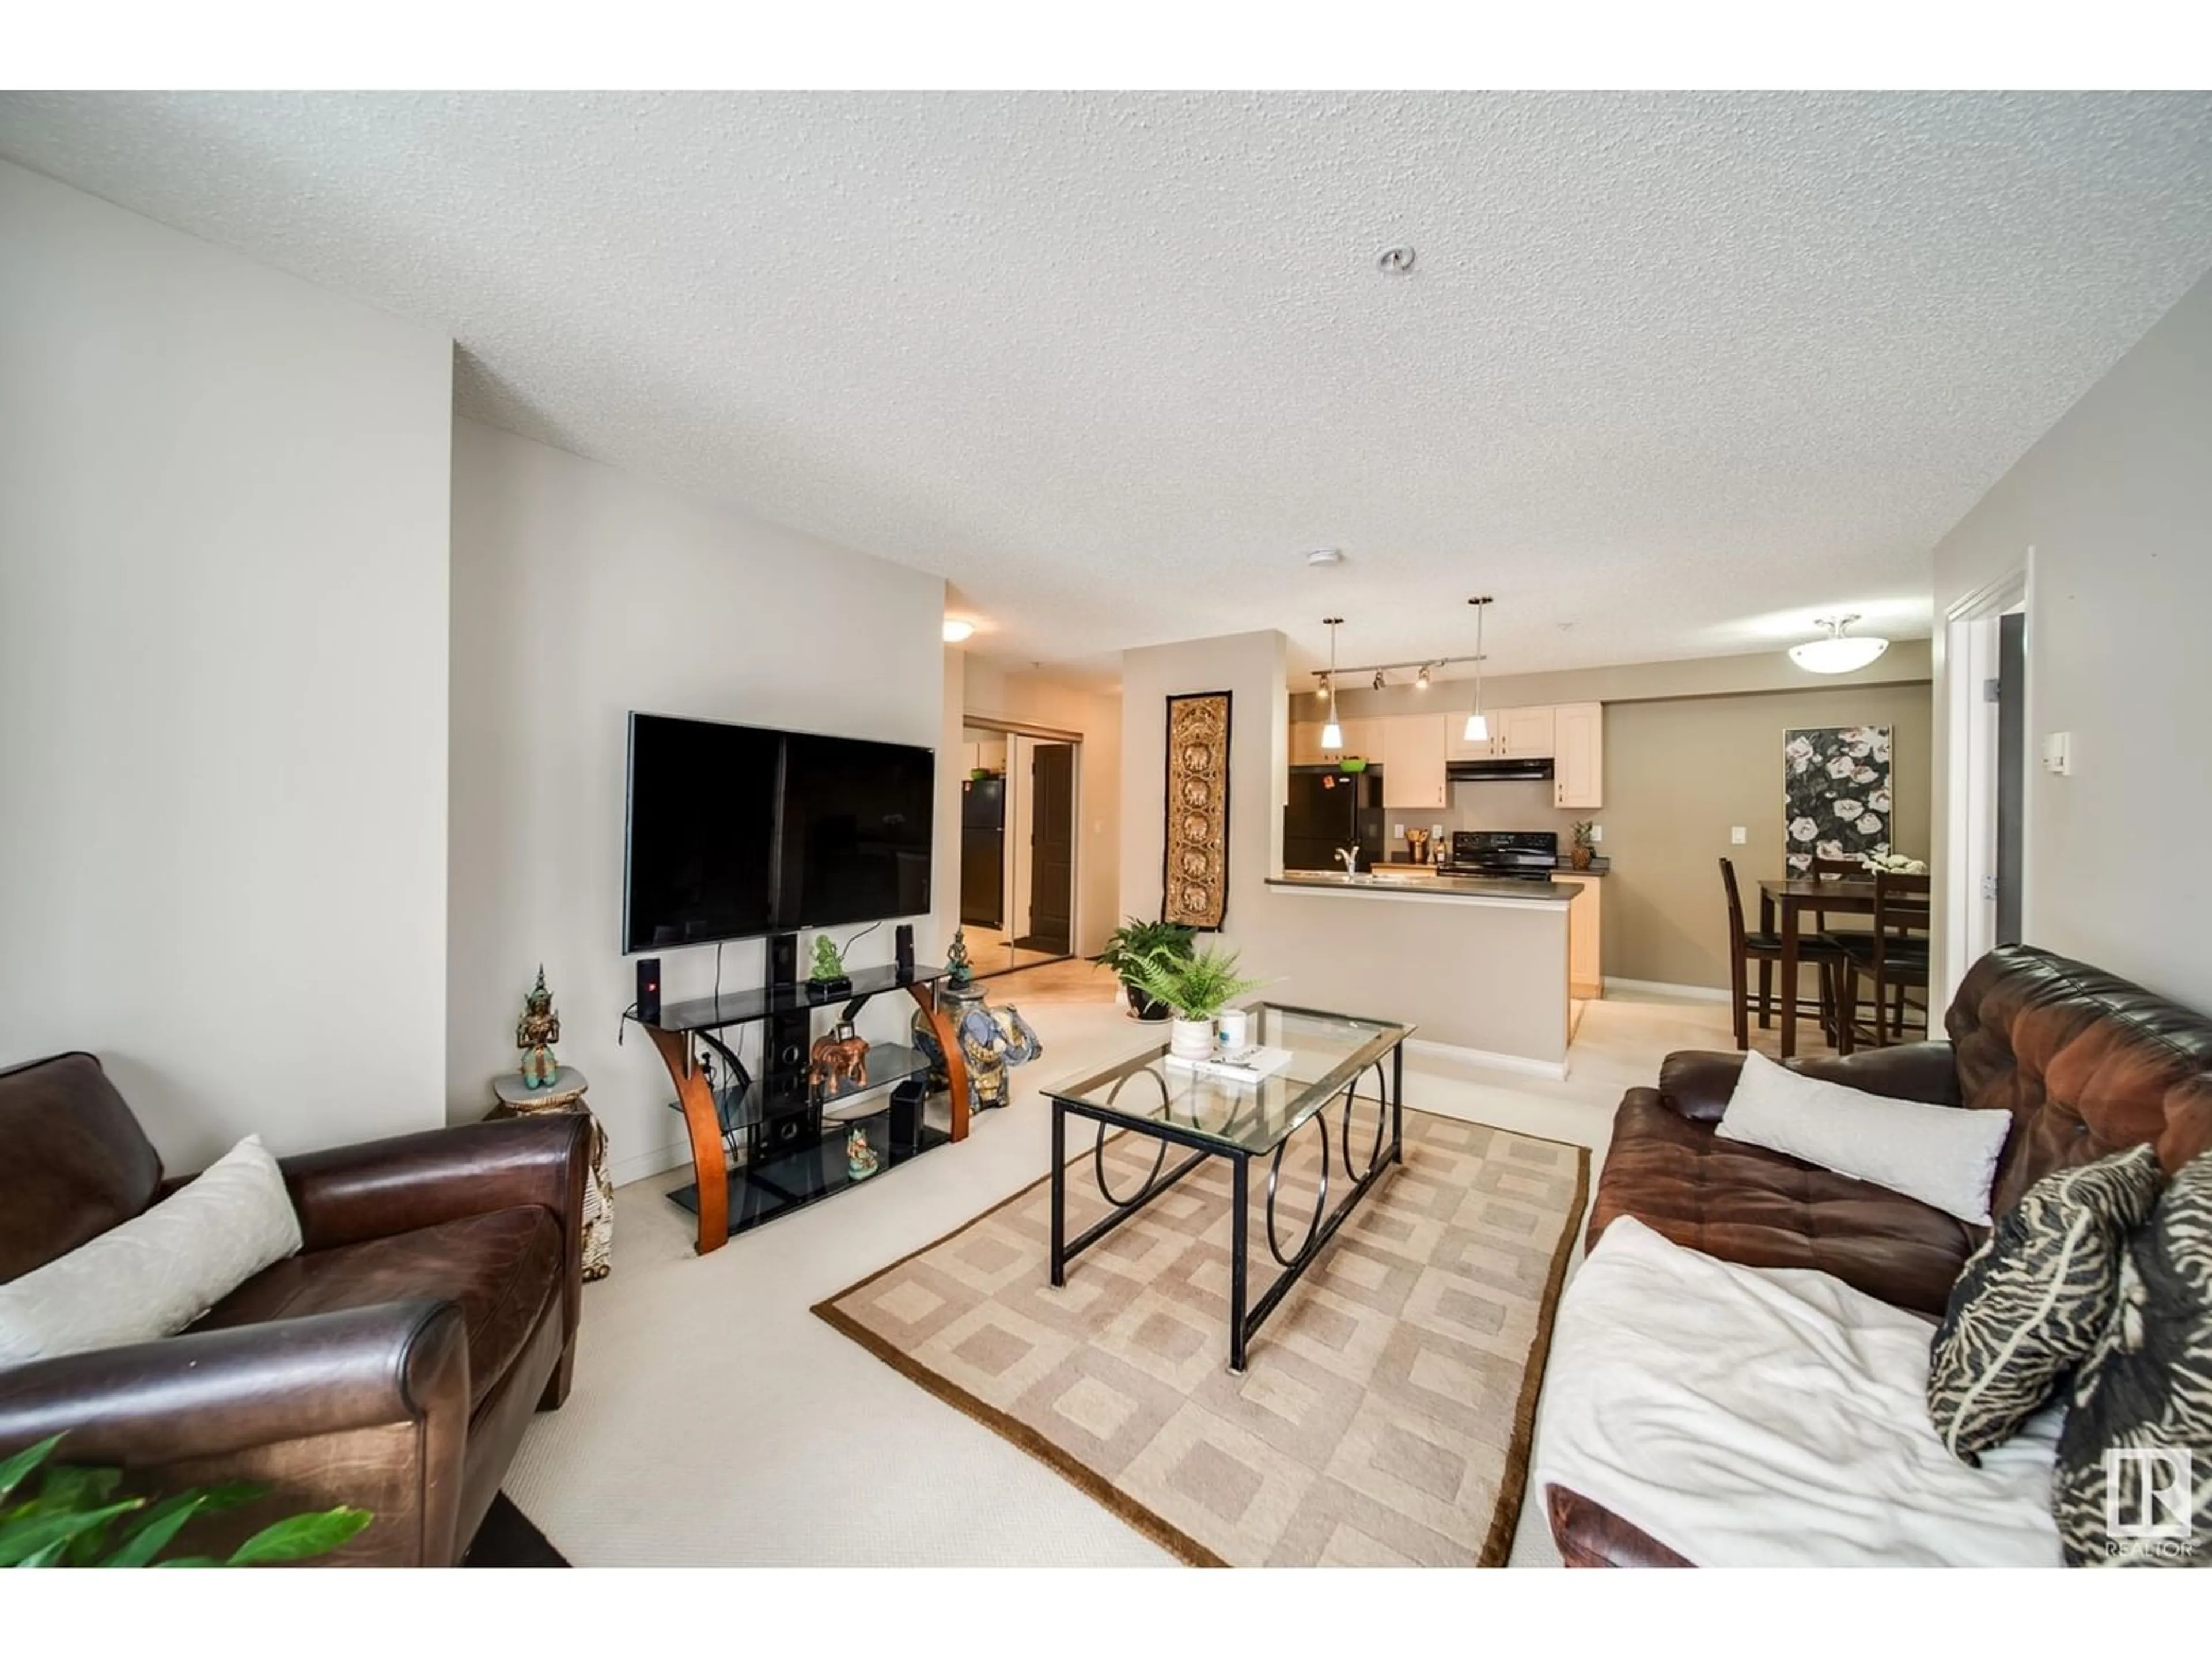 Living room for #122 13908 136 ST NW, Edmonton Alberta T6V1Y4